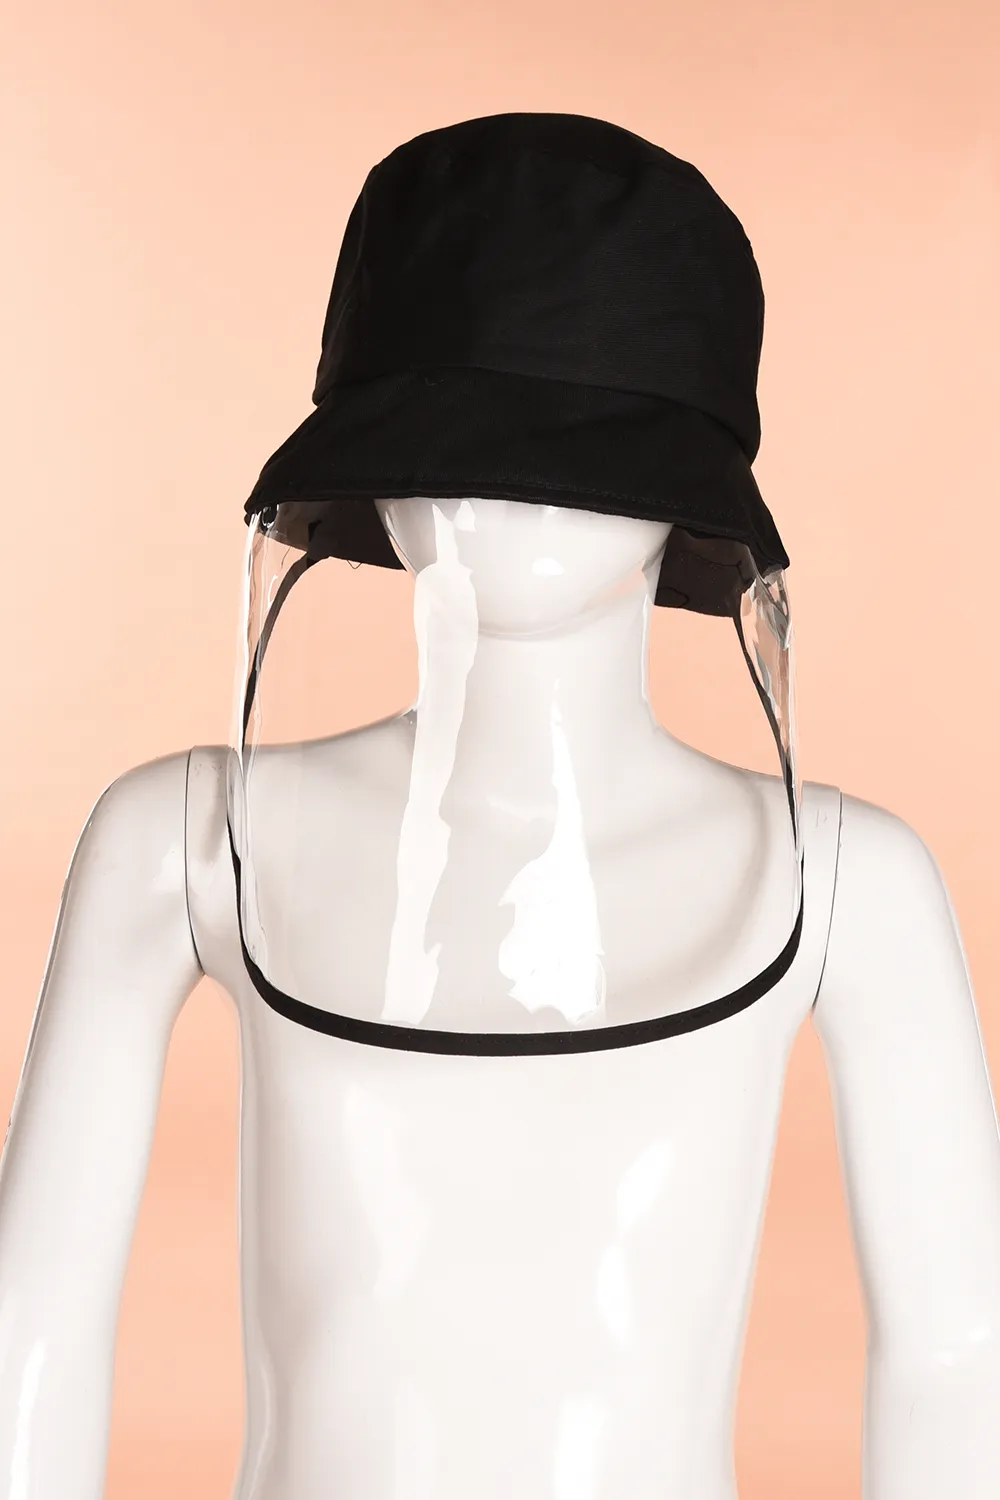 Nieuwe veiligheid anti stof beschermende masker zwarte dekking met hoed anti speeksel anti stofafdekking vol gezicht ogen bescherming masker